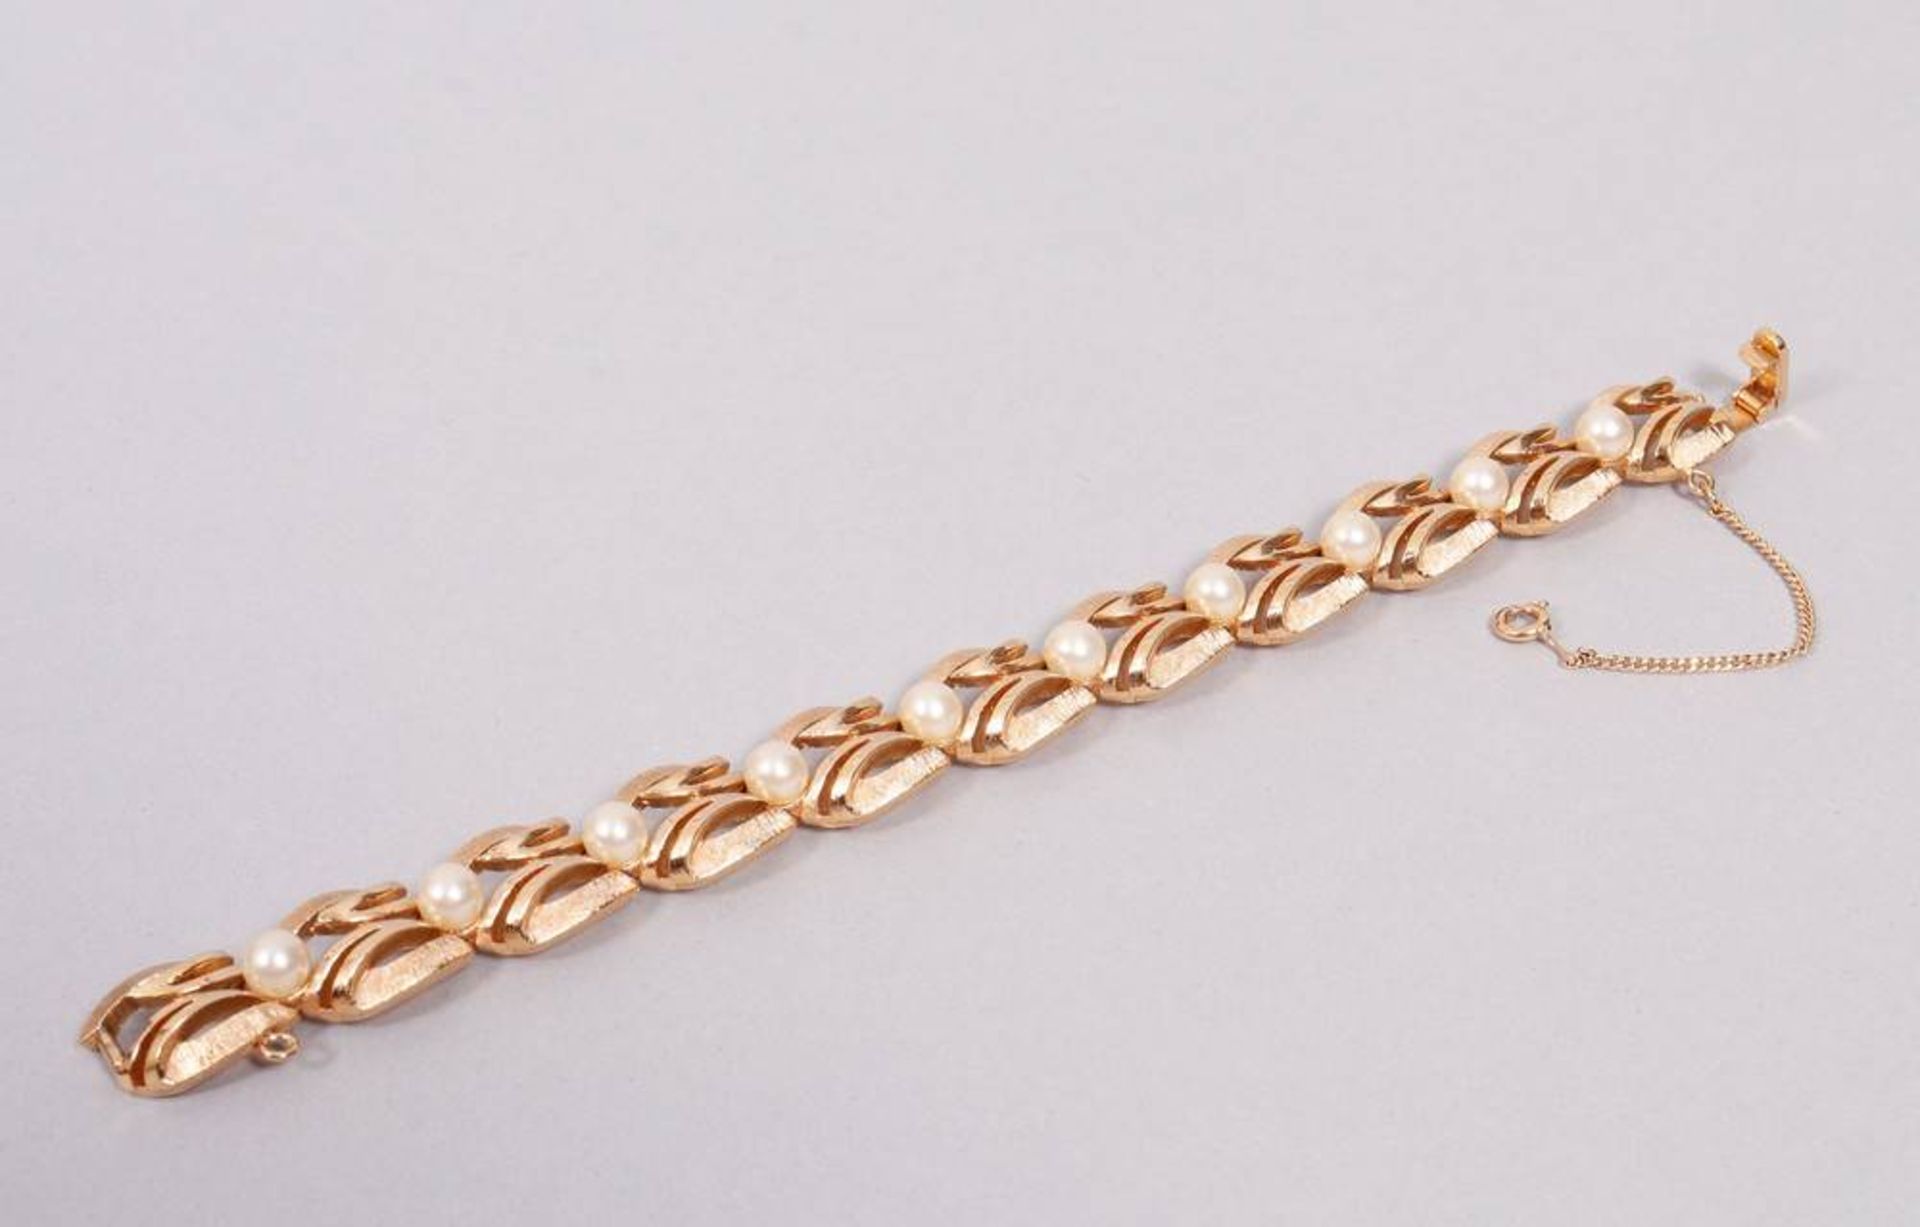 Bracelet, gold-plated, USA Trifari, 1950s, - Image 2 of 4